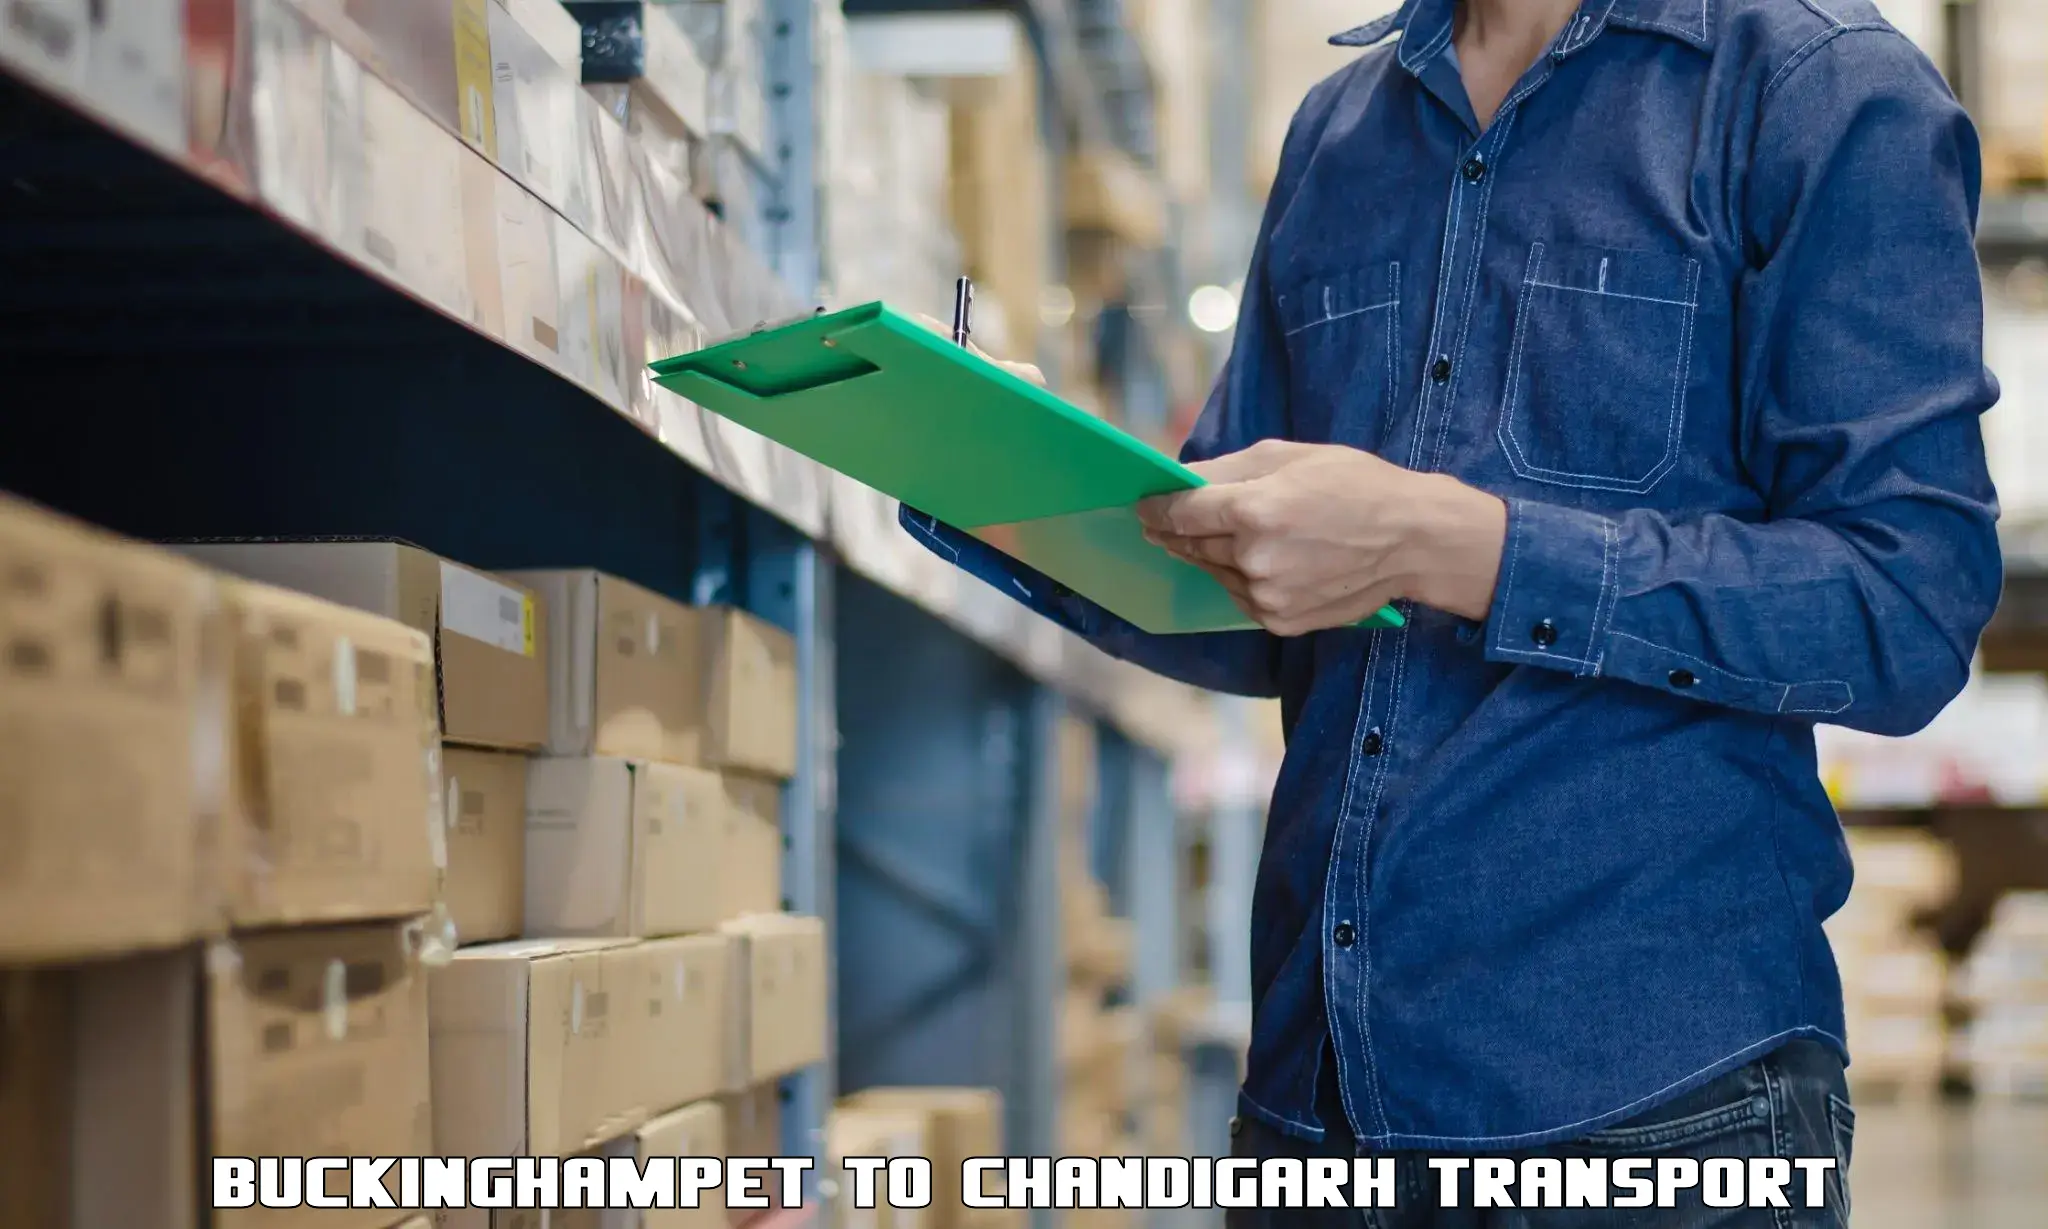 Cargo transportation services Buckinghampet to Chandigarh